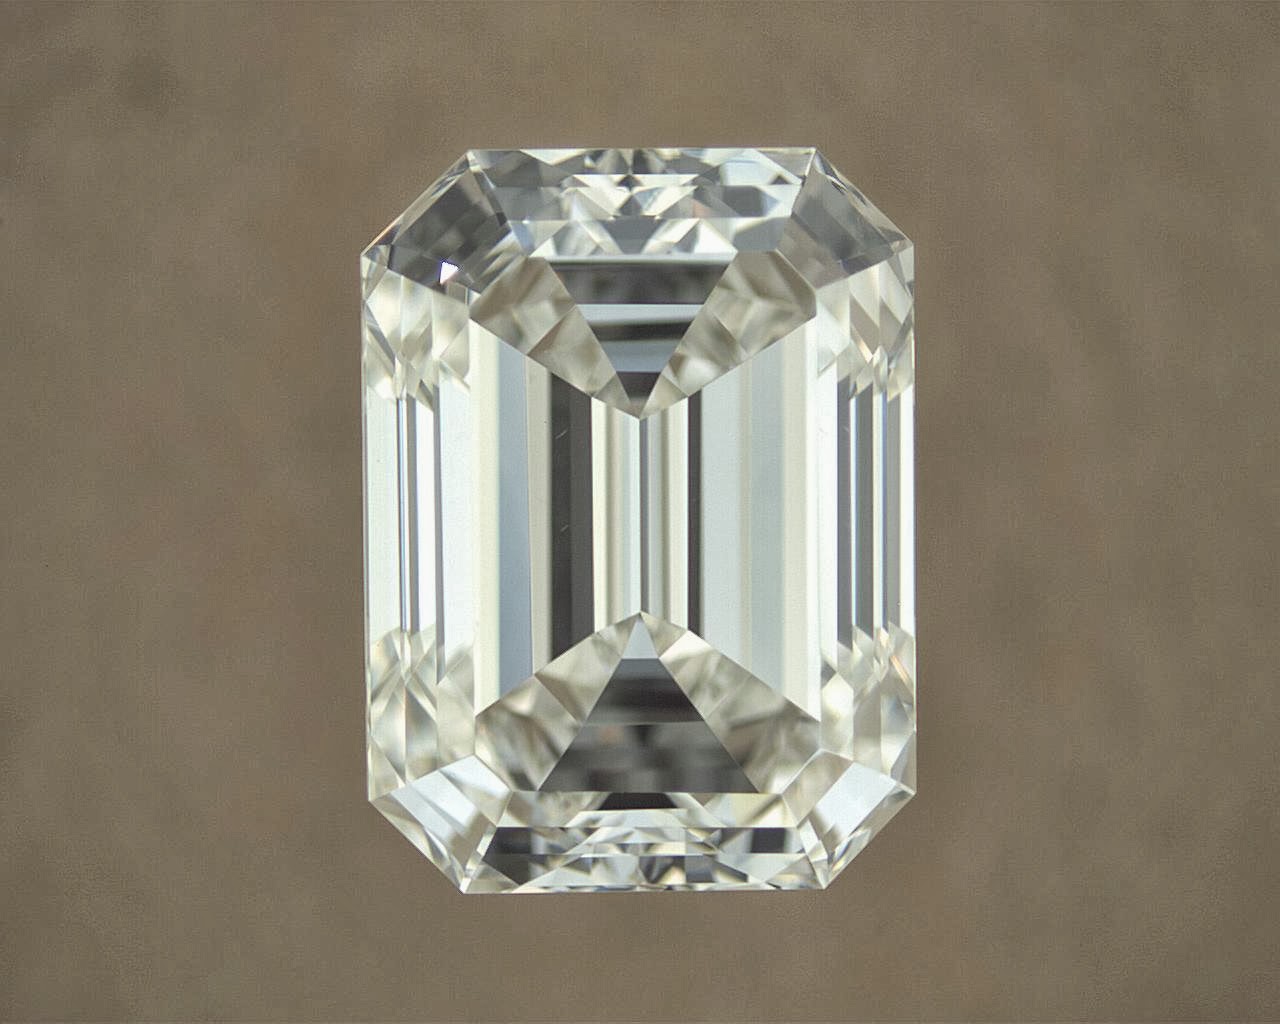 James Is An Atlanta Jeweler: If You Love The Emerald Cut Diamond I Want